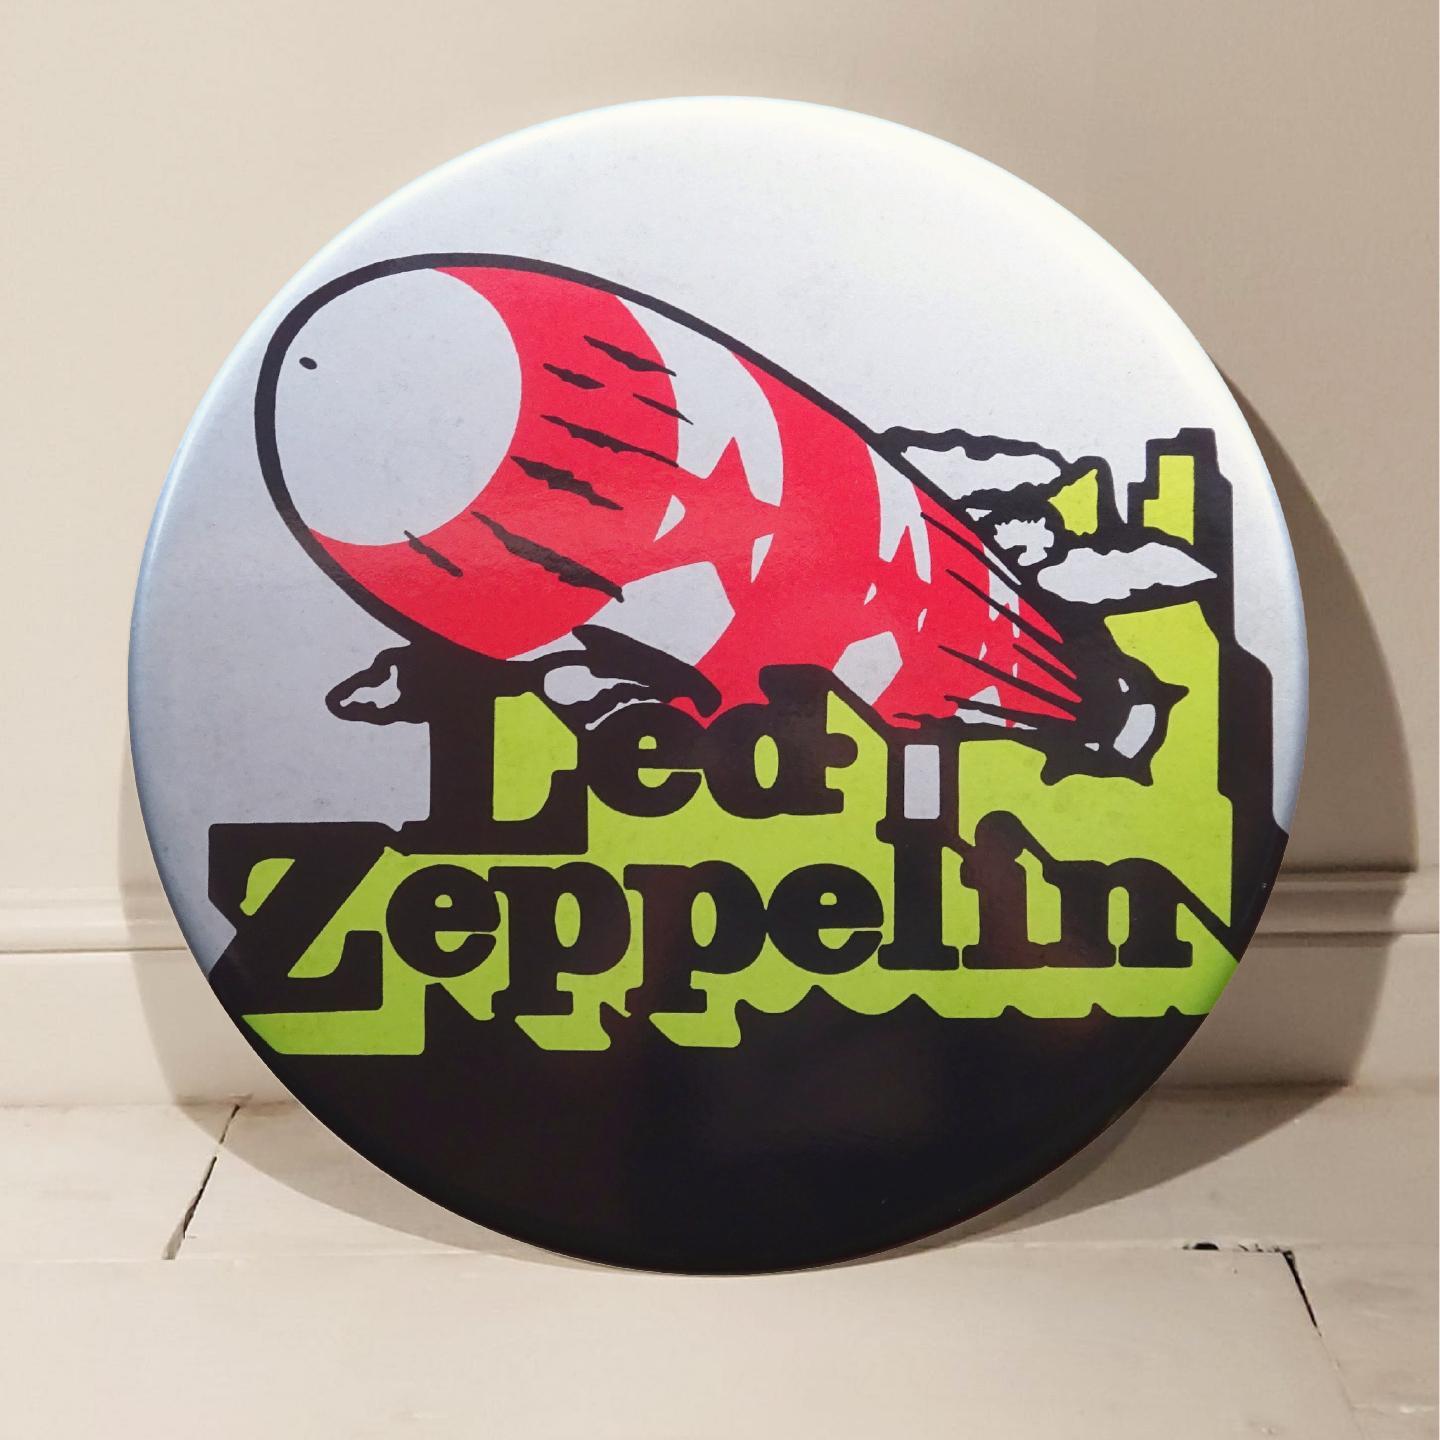 Led Zeppelin (Metallic) Giant Handmade 3D Vintage Button